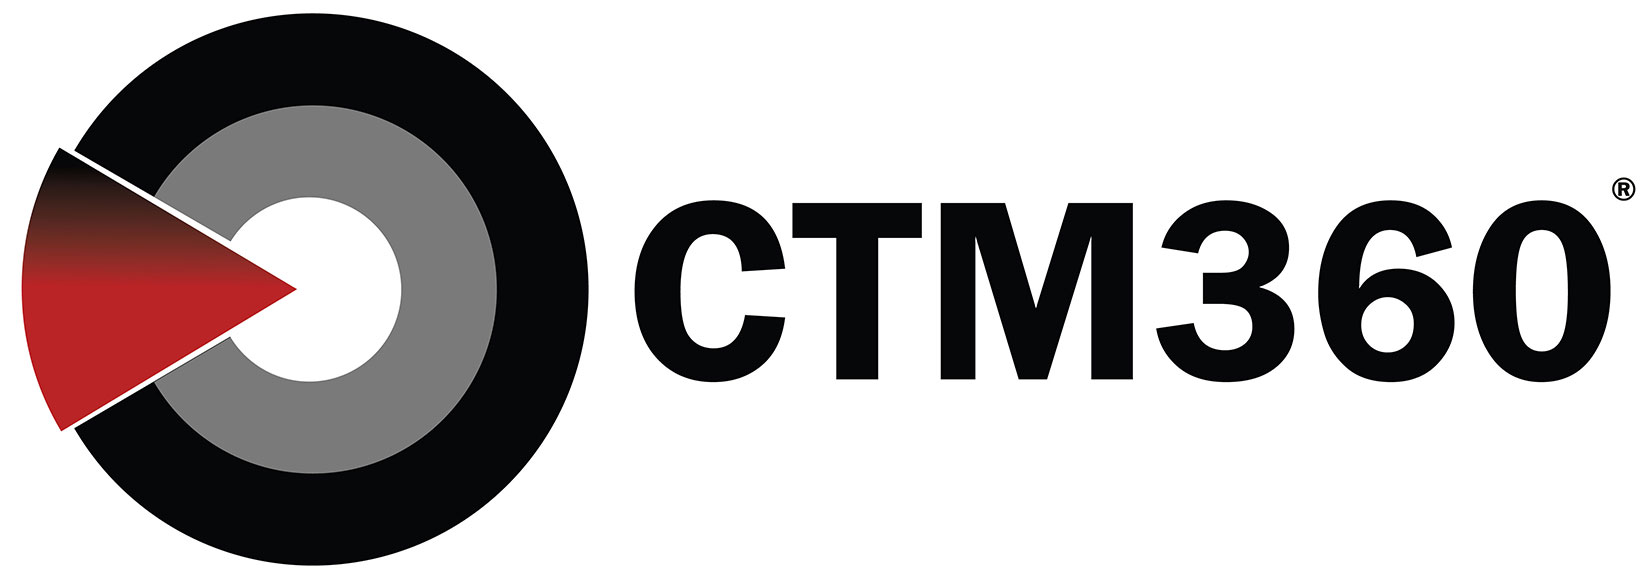 CTM360 Logo